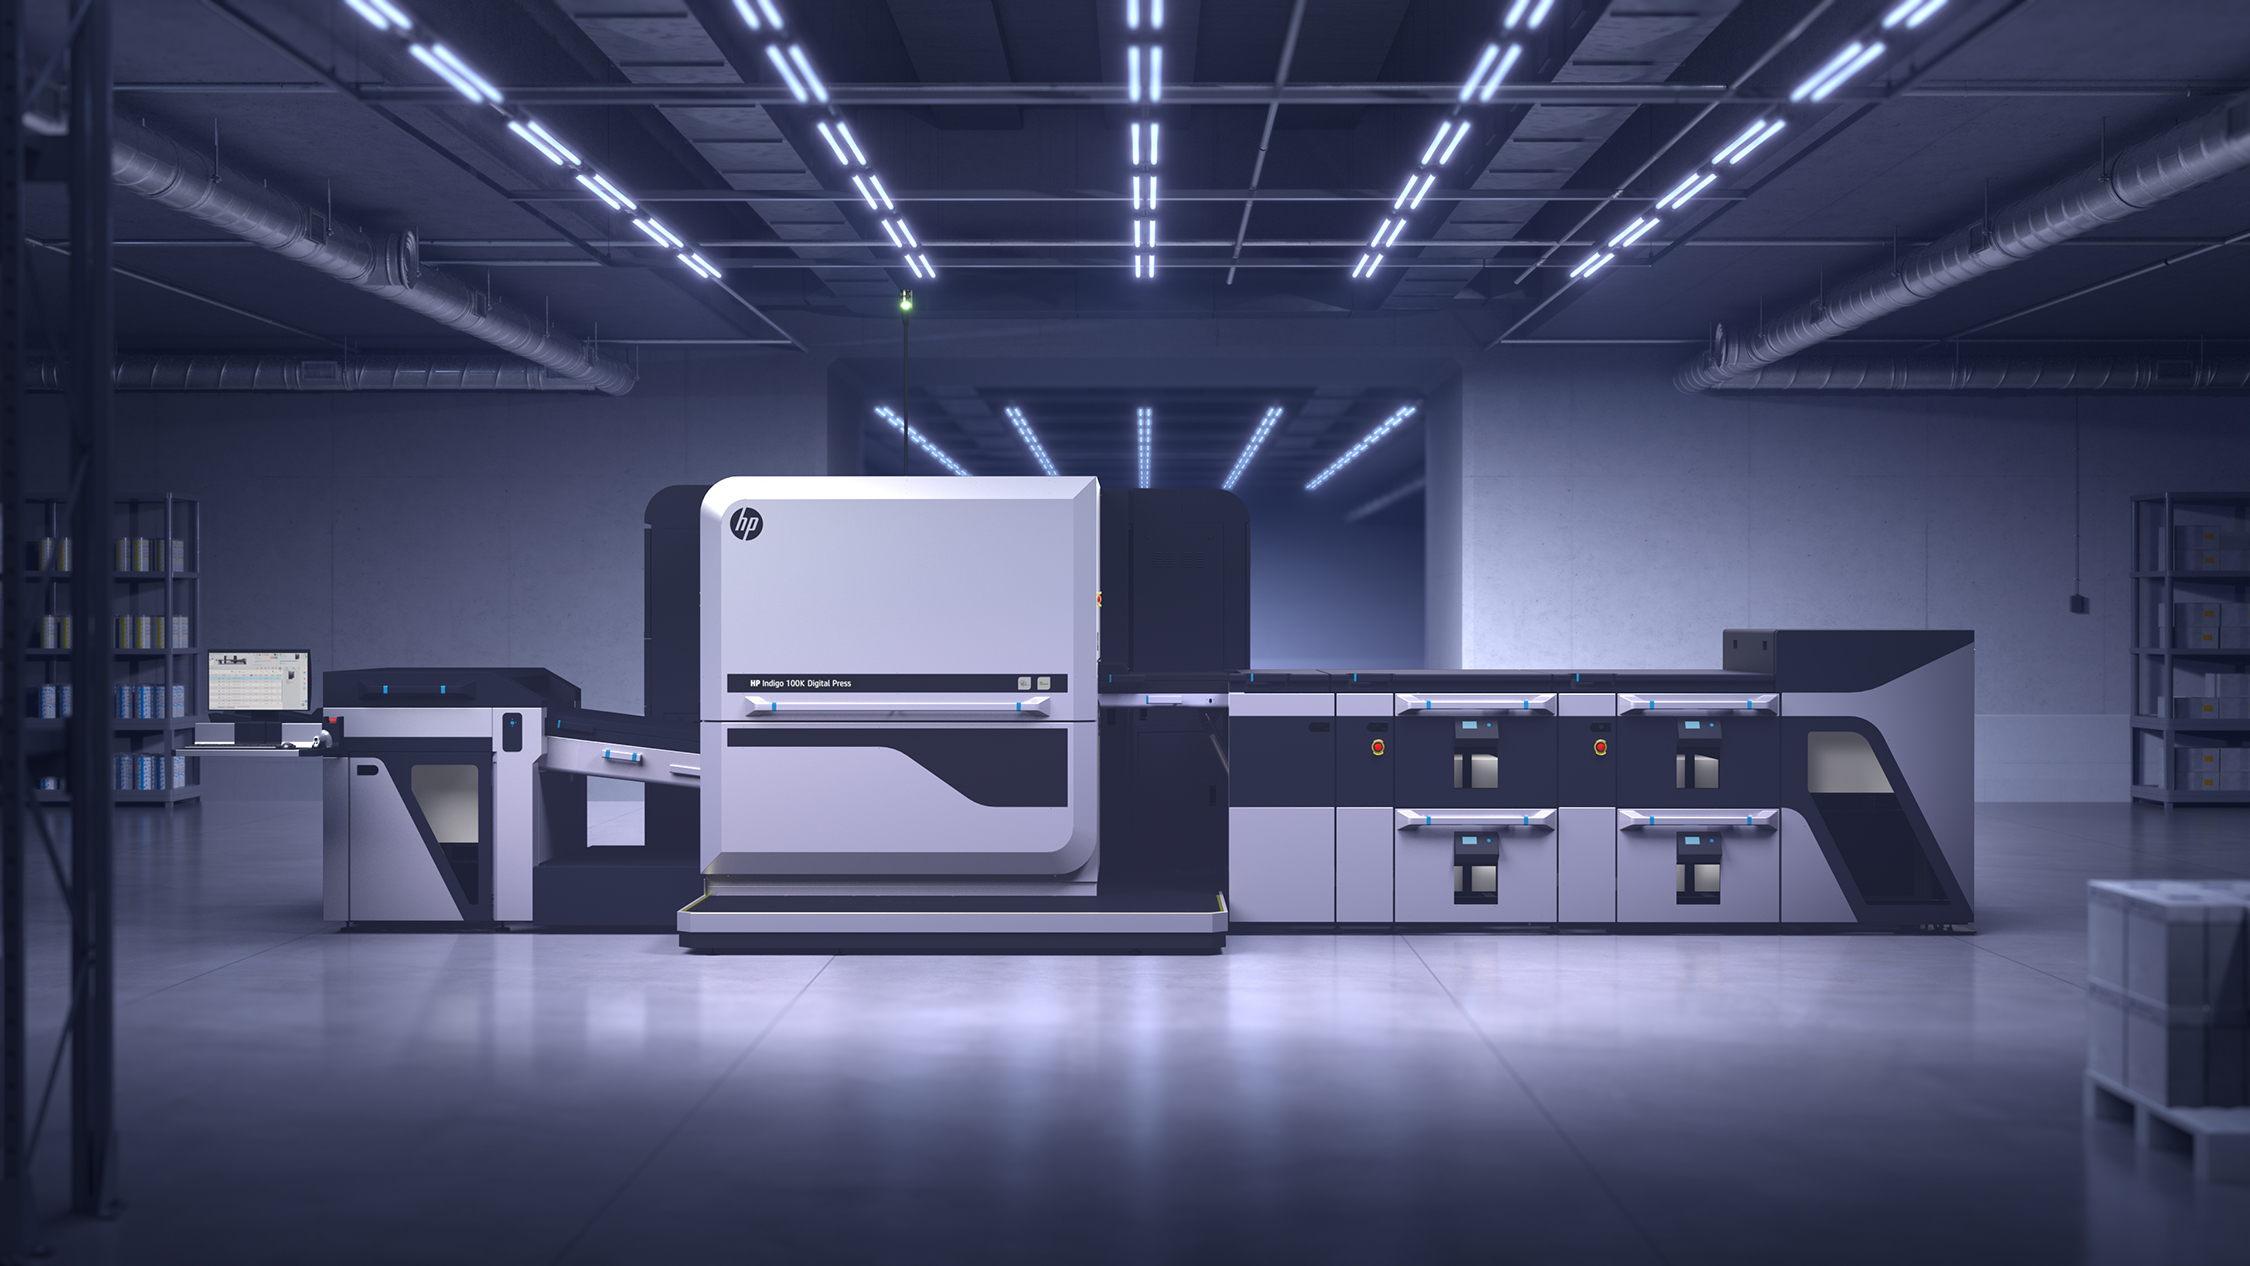 The new HP 100K Digital Press in pressroom